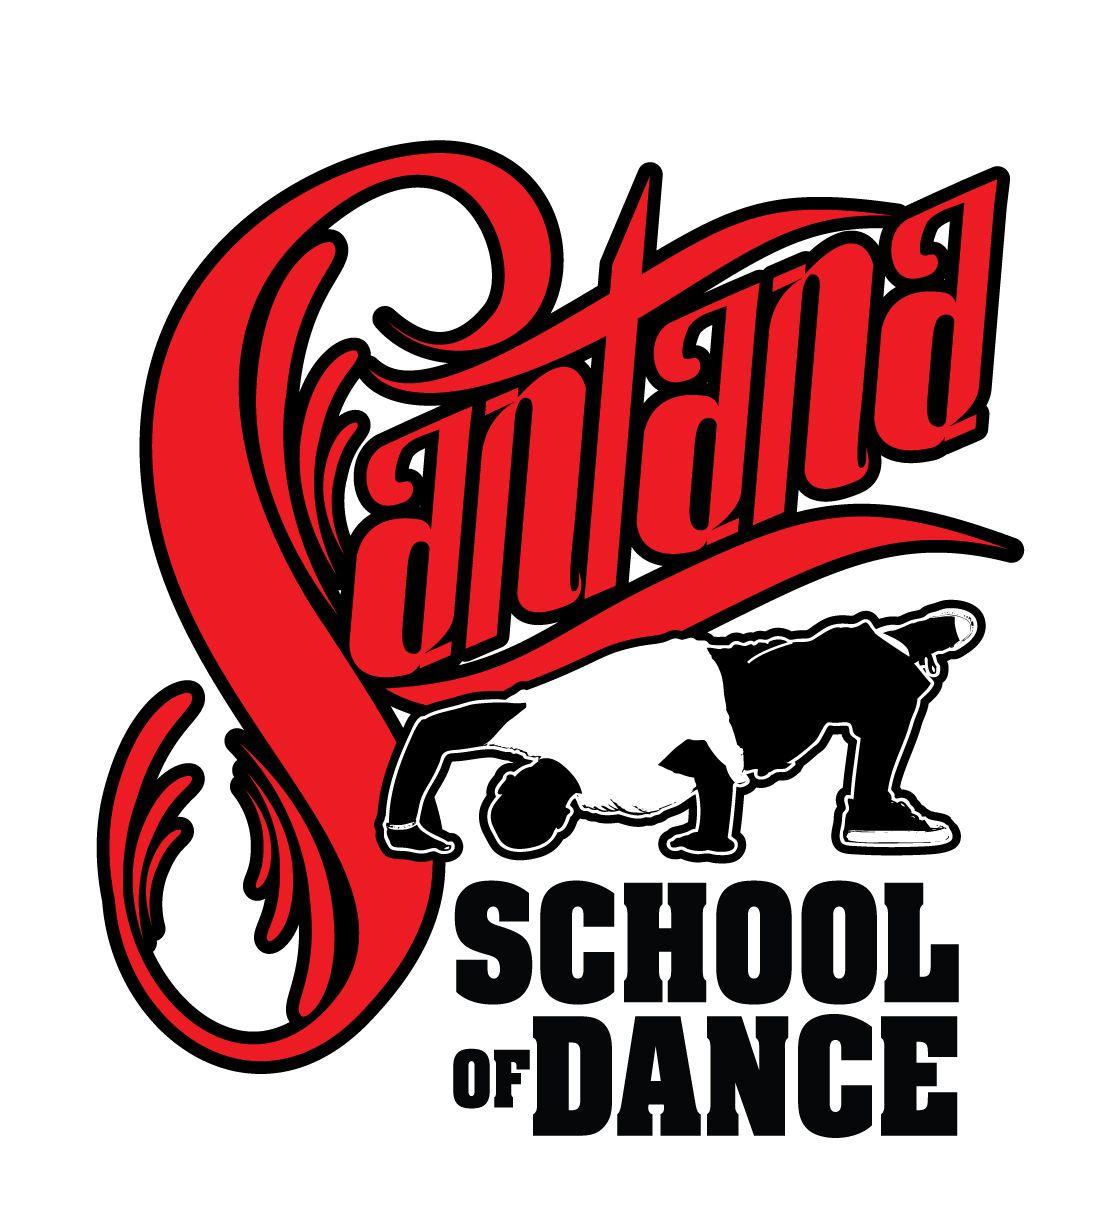 Santana Logo - Santana School of Dance Logos